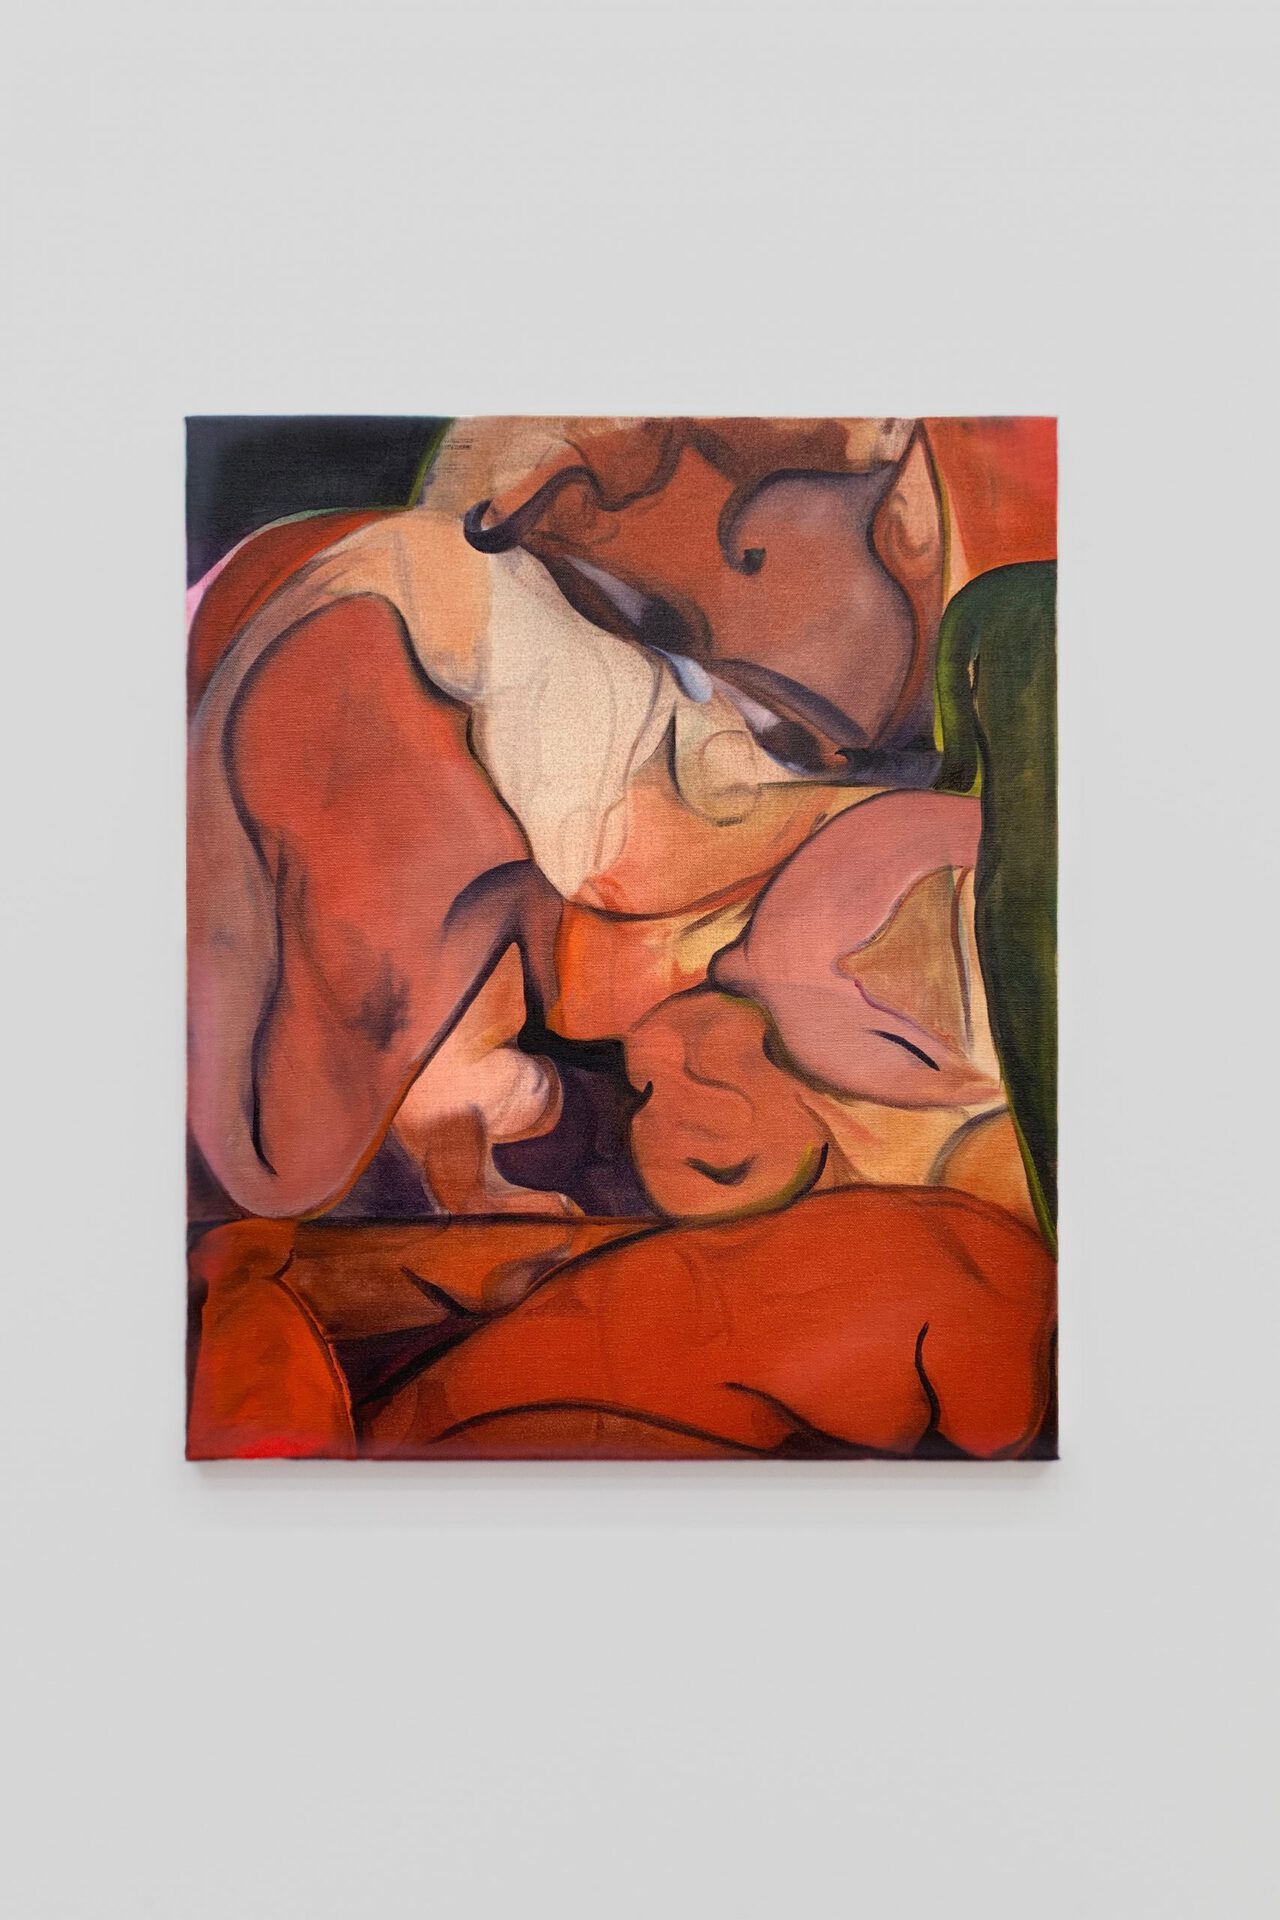 Julia Trybala, Cry Baby, 2020, Oil on canvas, 42 x 51cm.